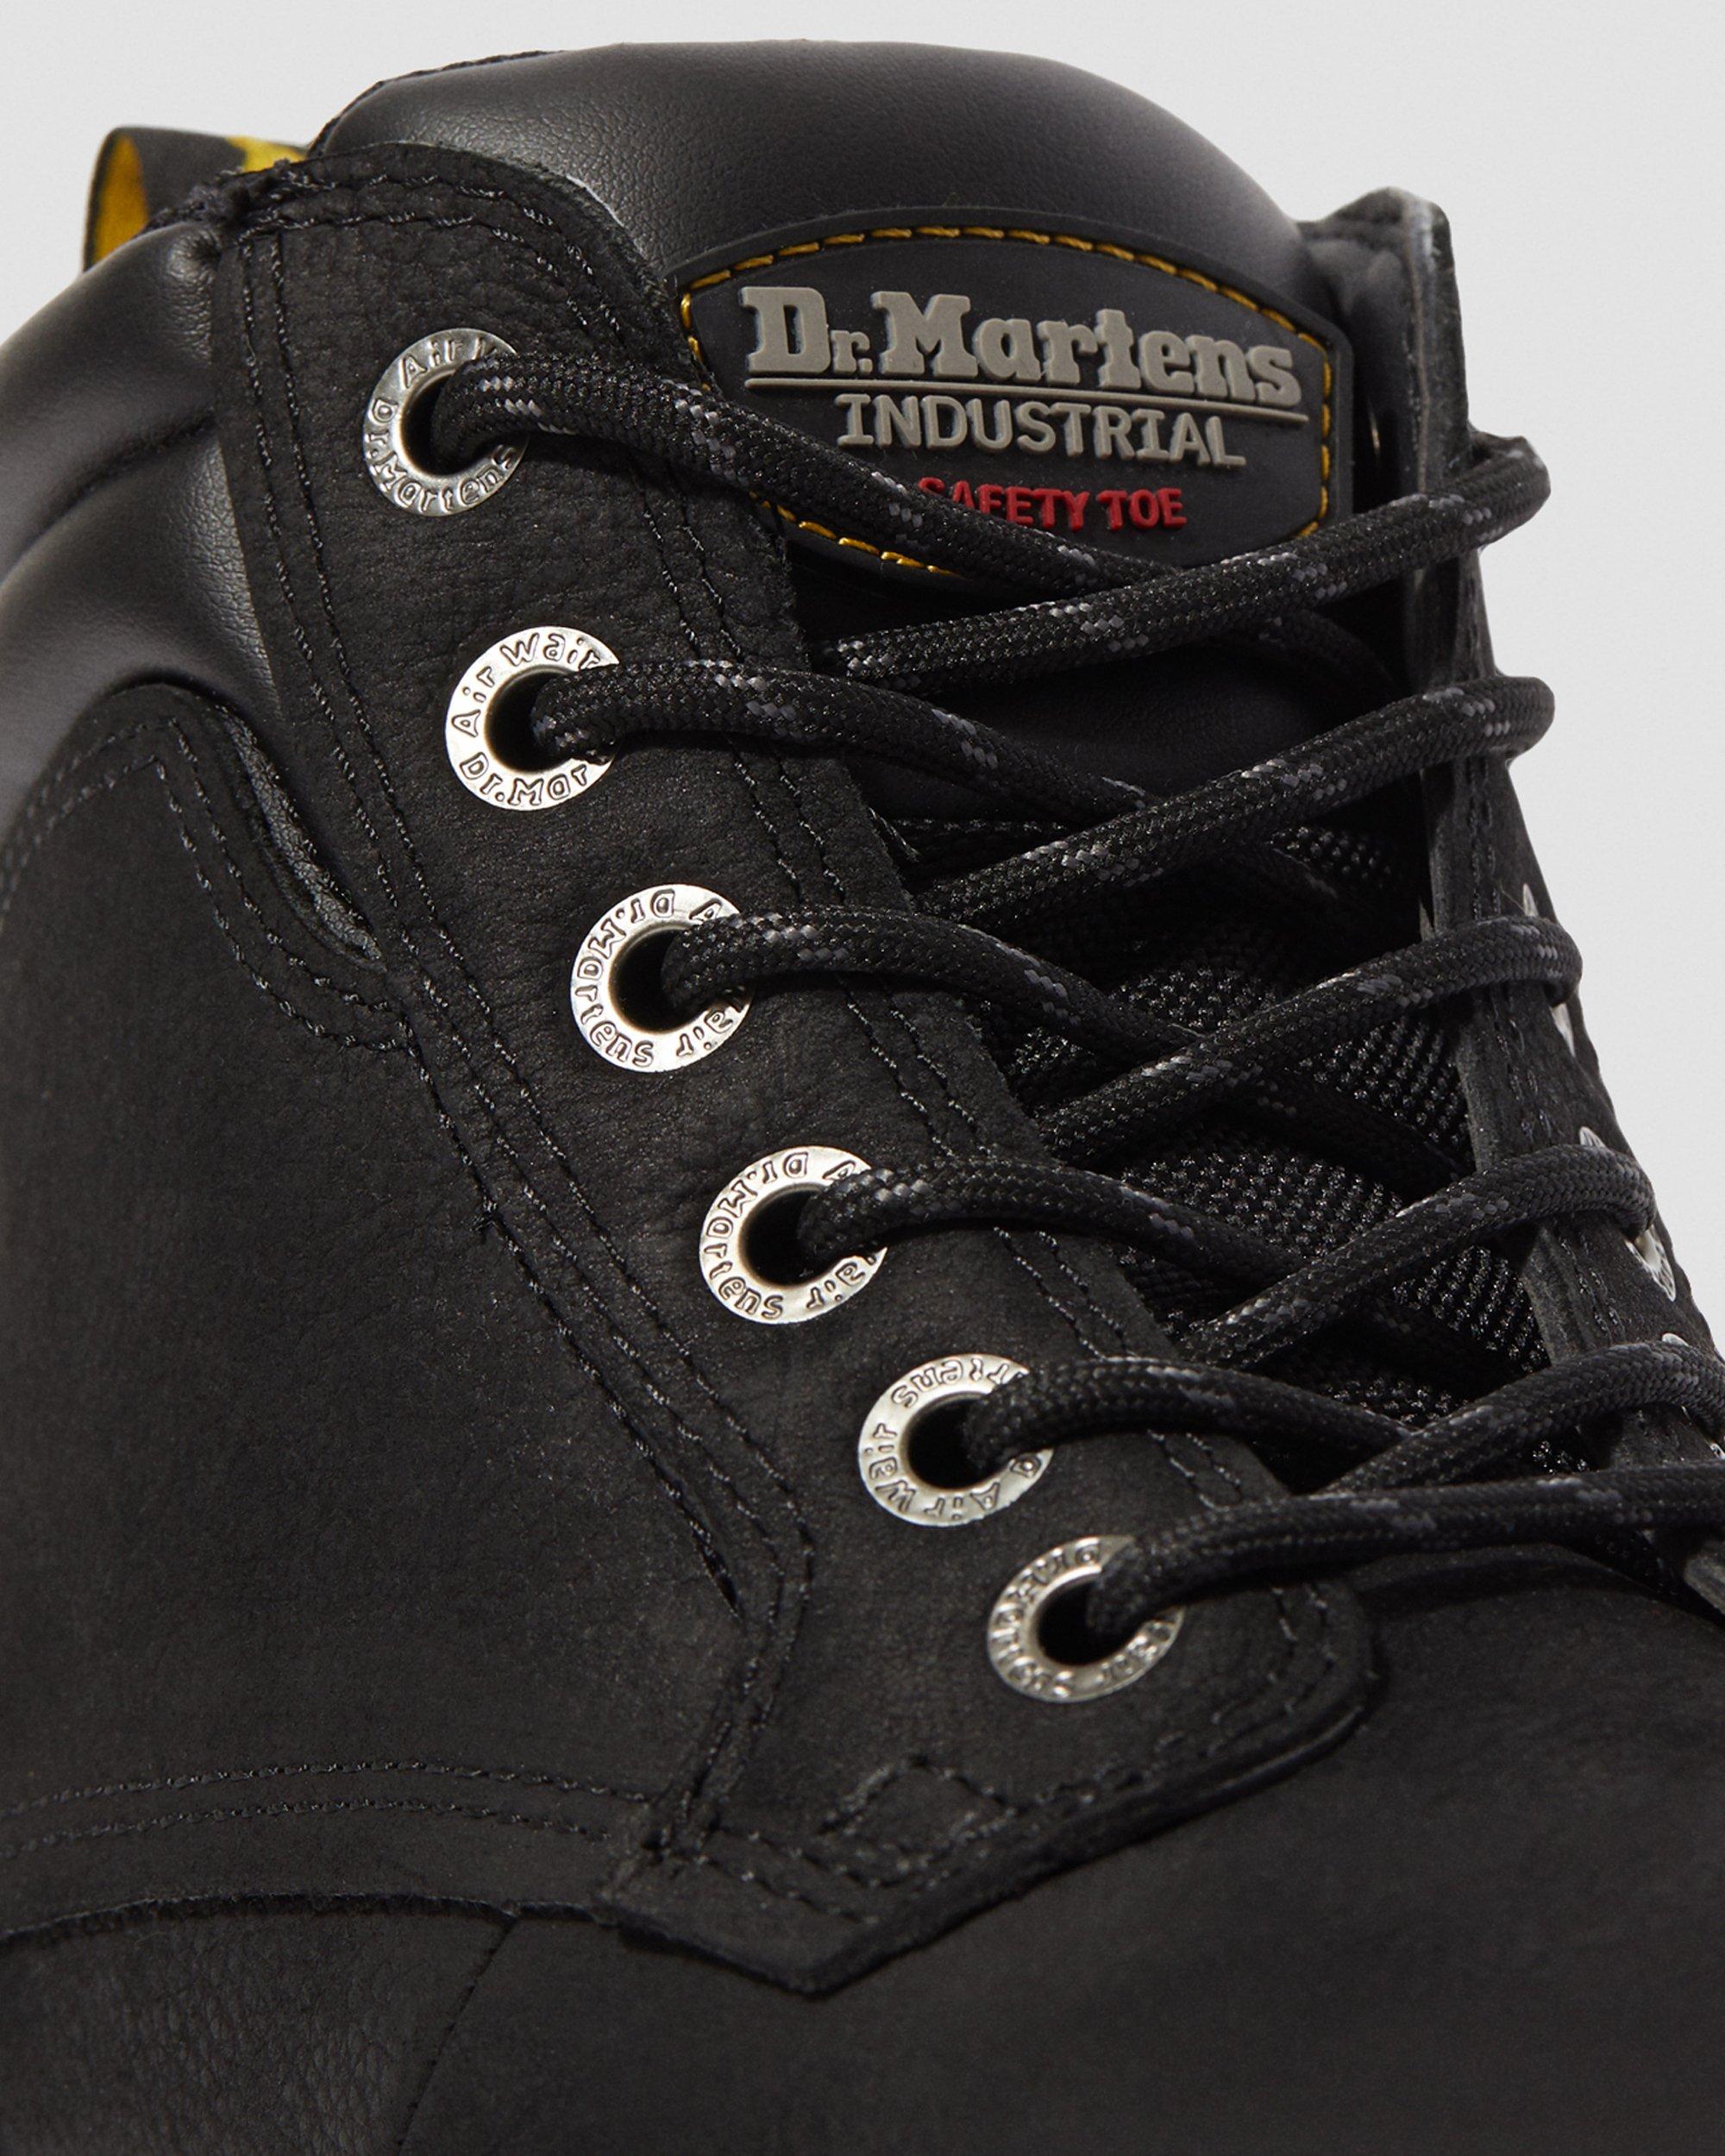 Dr Martens Riverton Safety Mens Boots Industrial Leather Hiker Toe Cap Work Shoe 